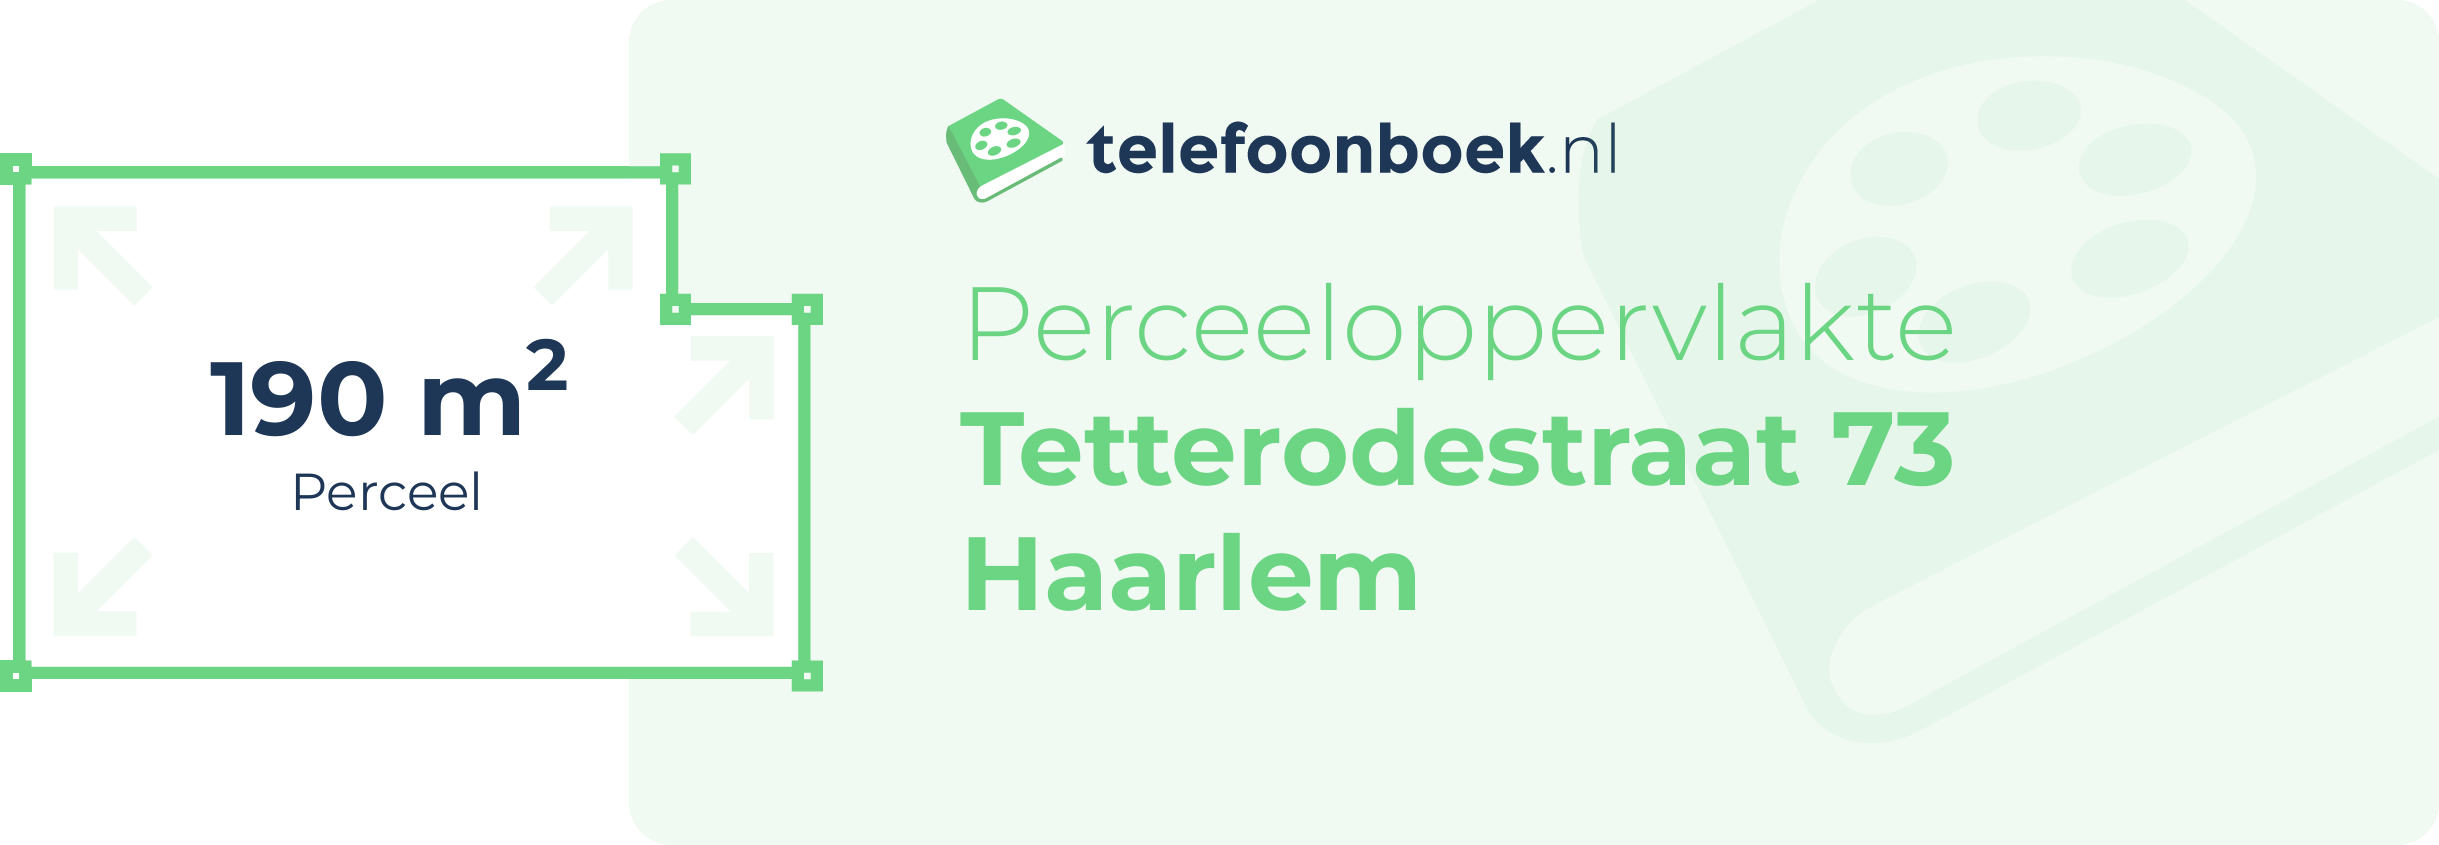 Perceeloppervlakte Tetterodestraat 73 Haarlem